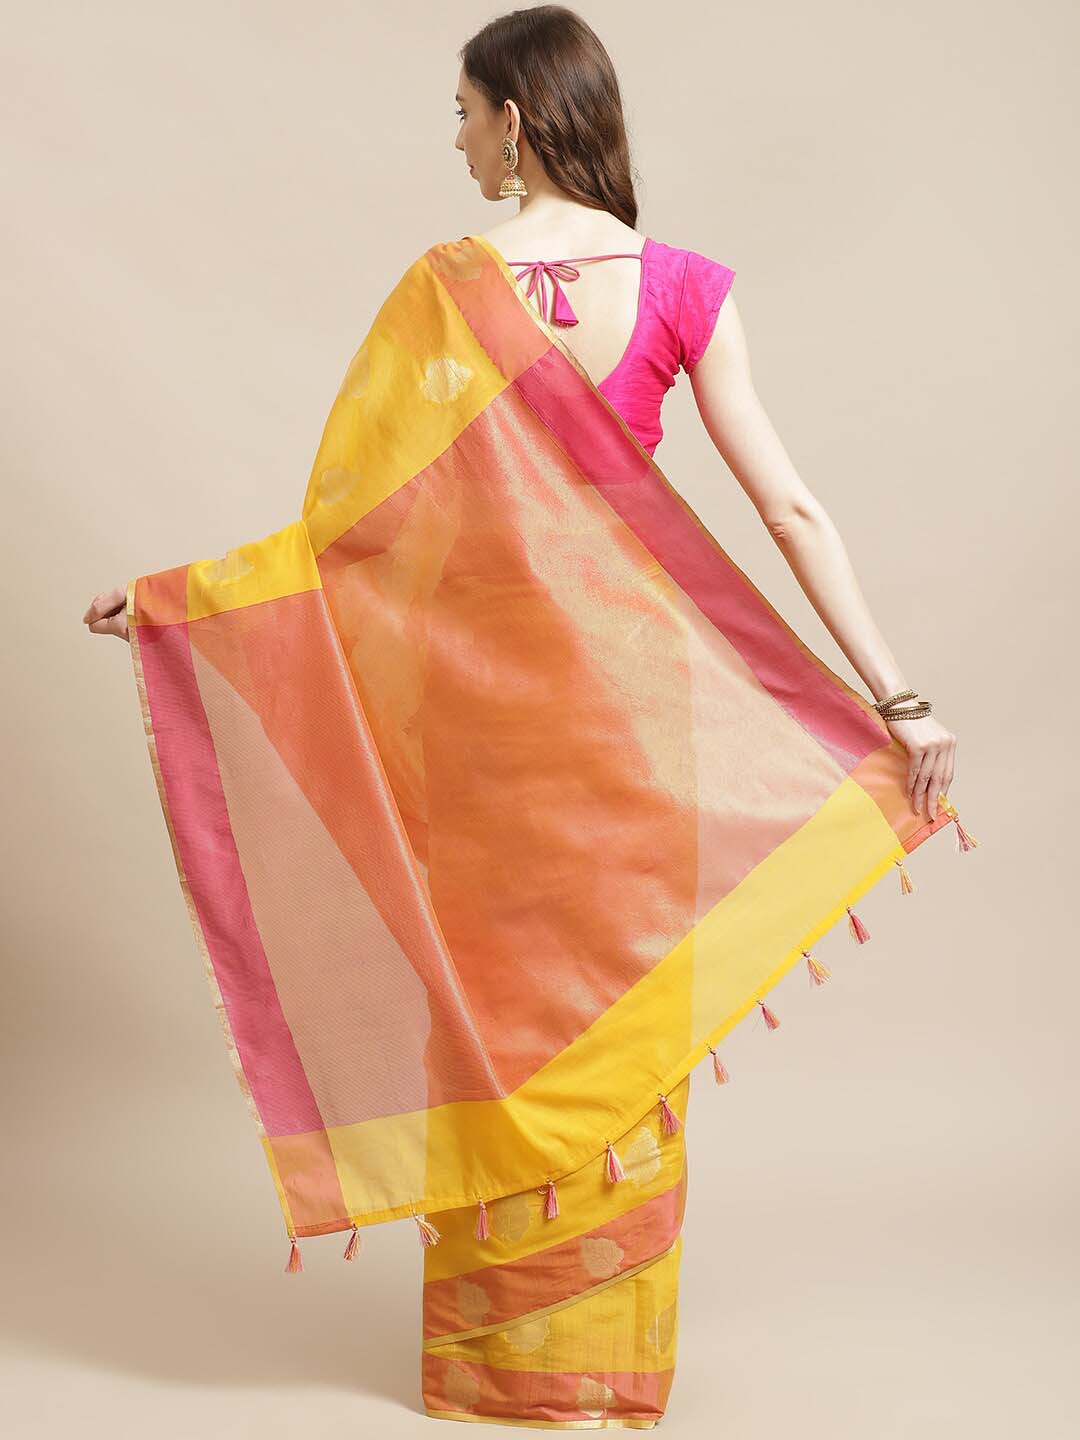 Indethnic Banarasi Yellow Woven Design Daily Wear Saree - View 3